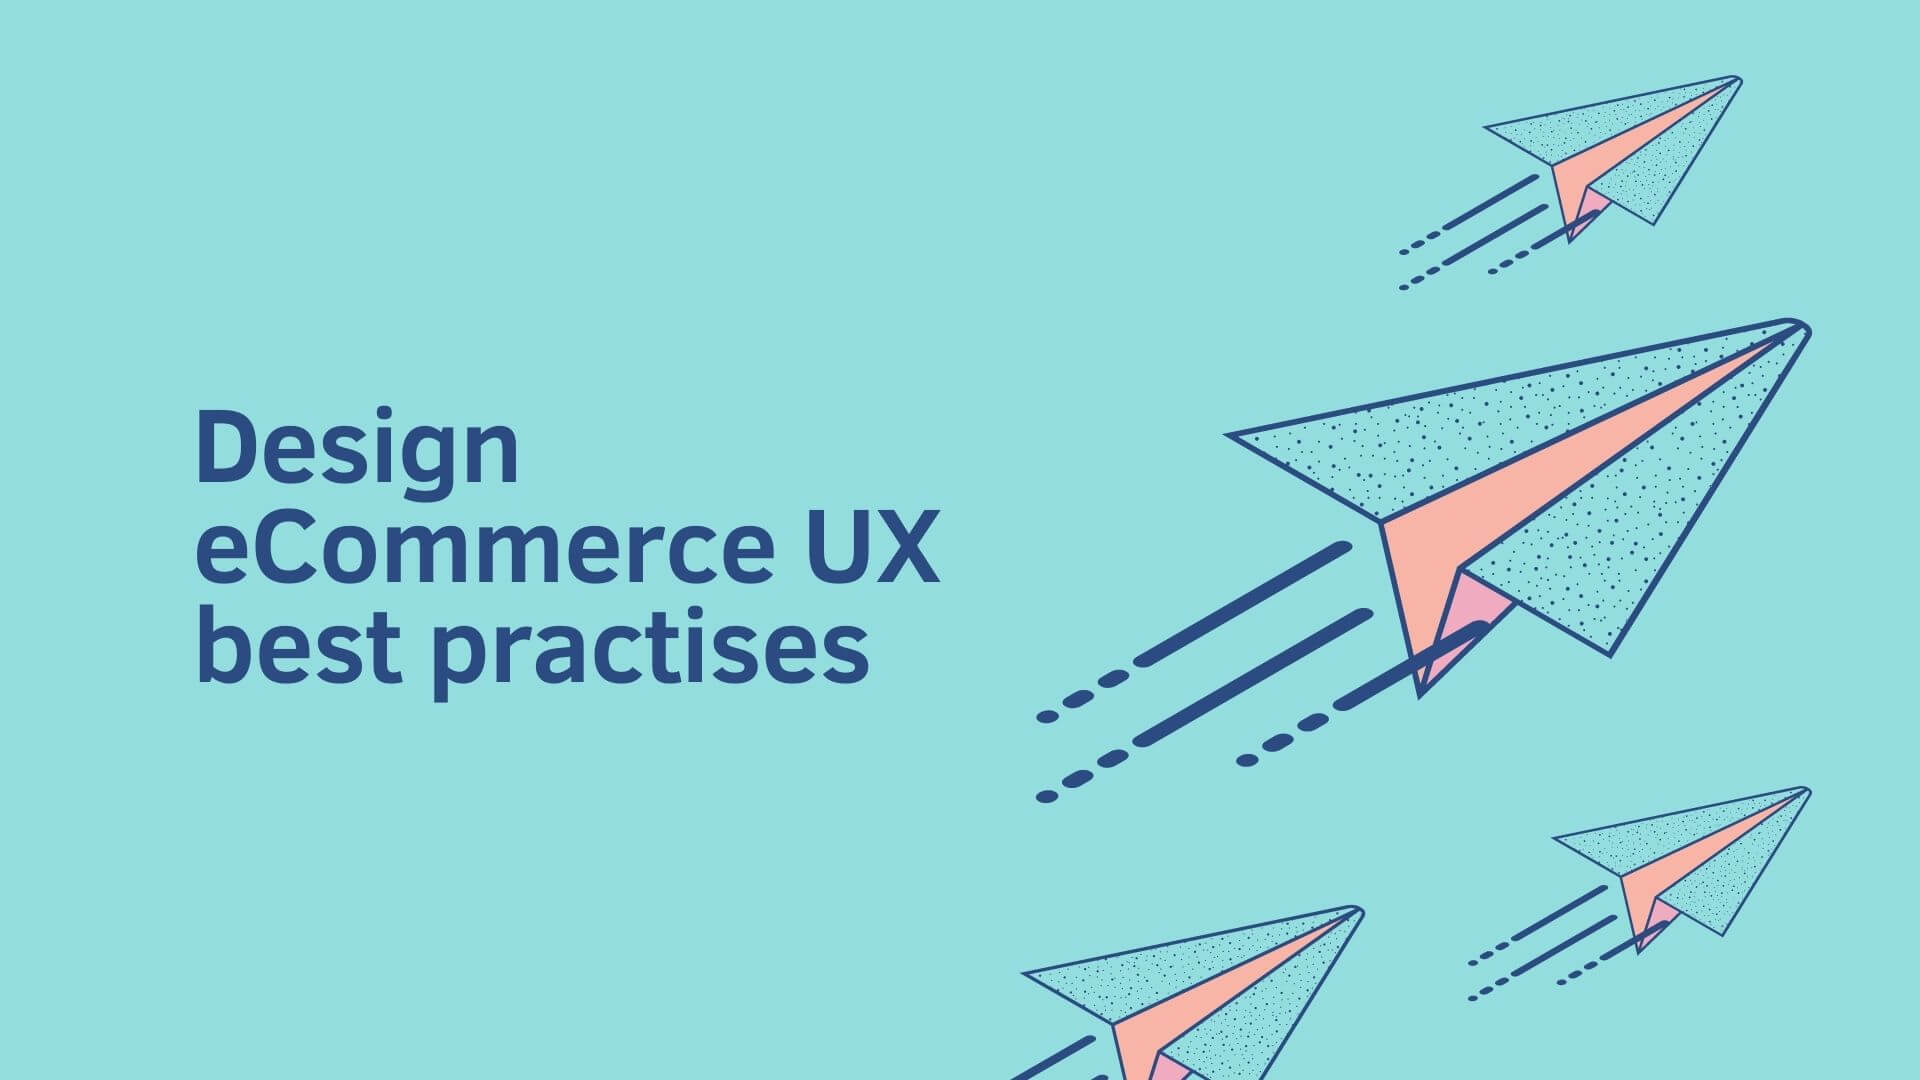 Designing eCommerce UX best practises